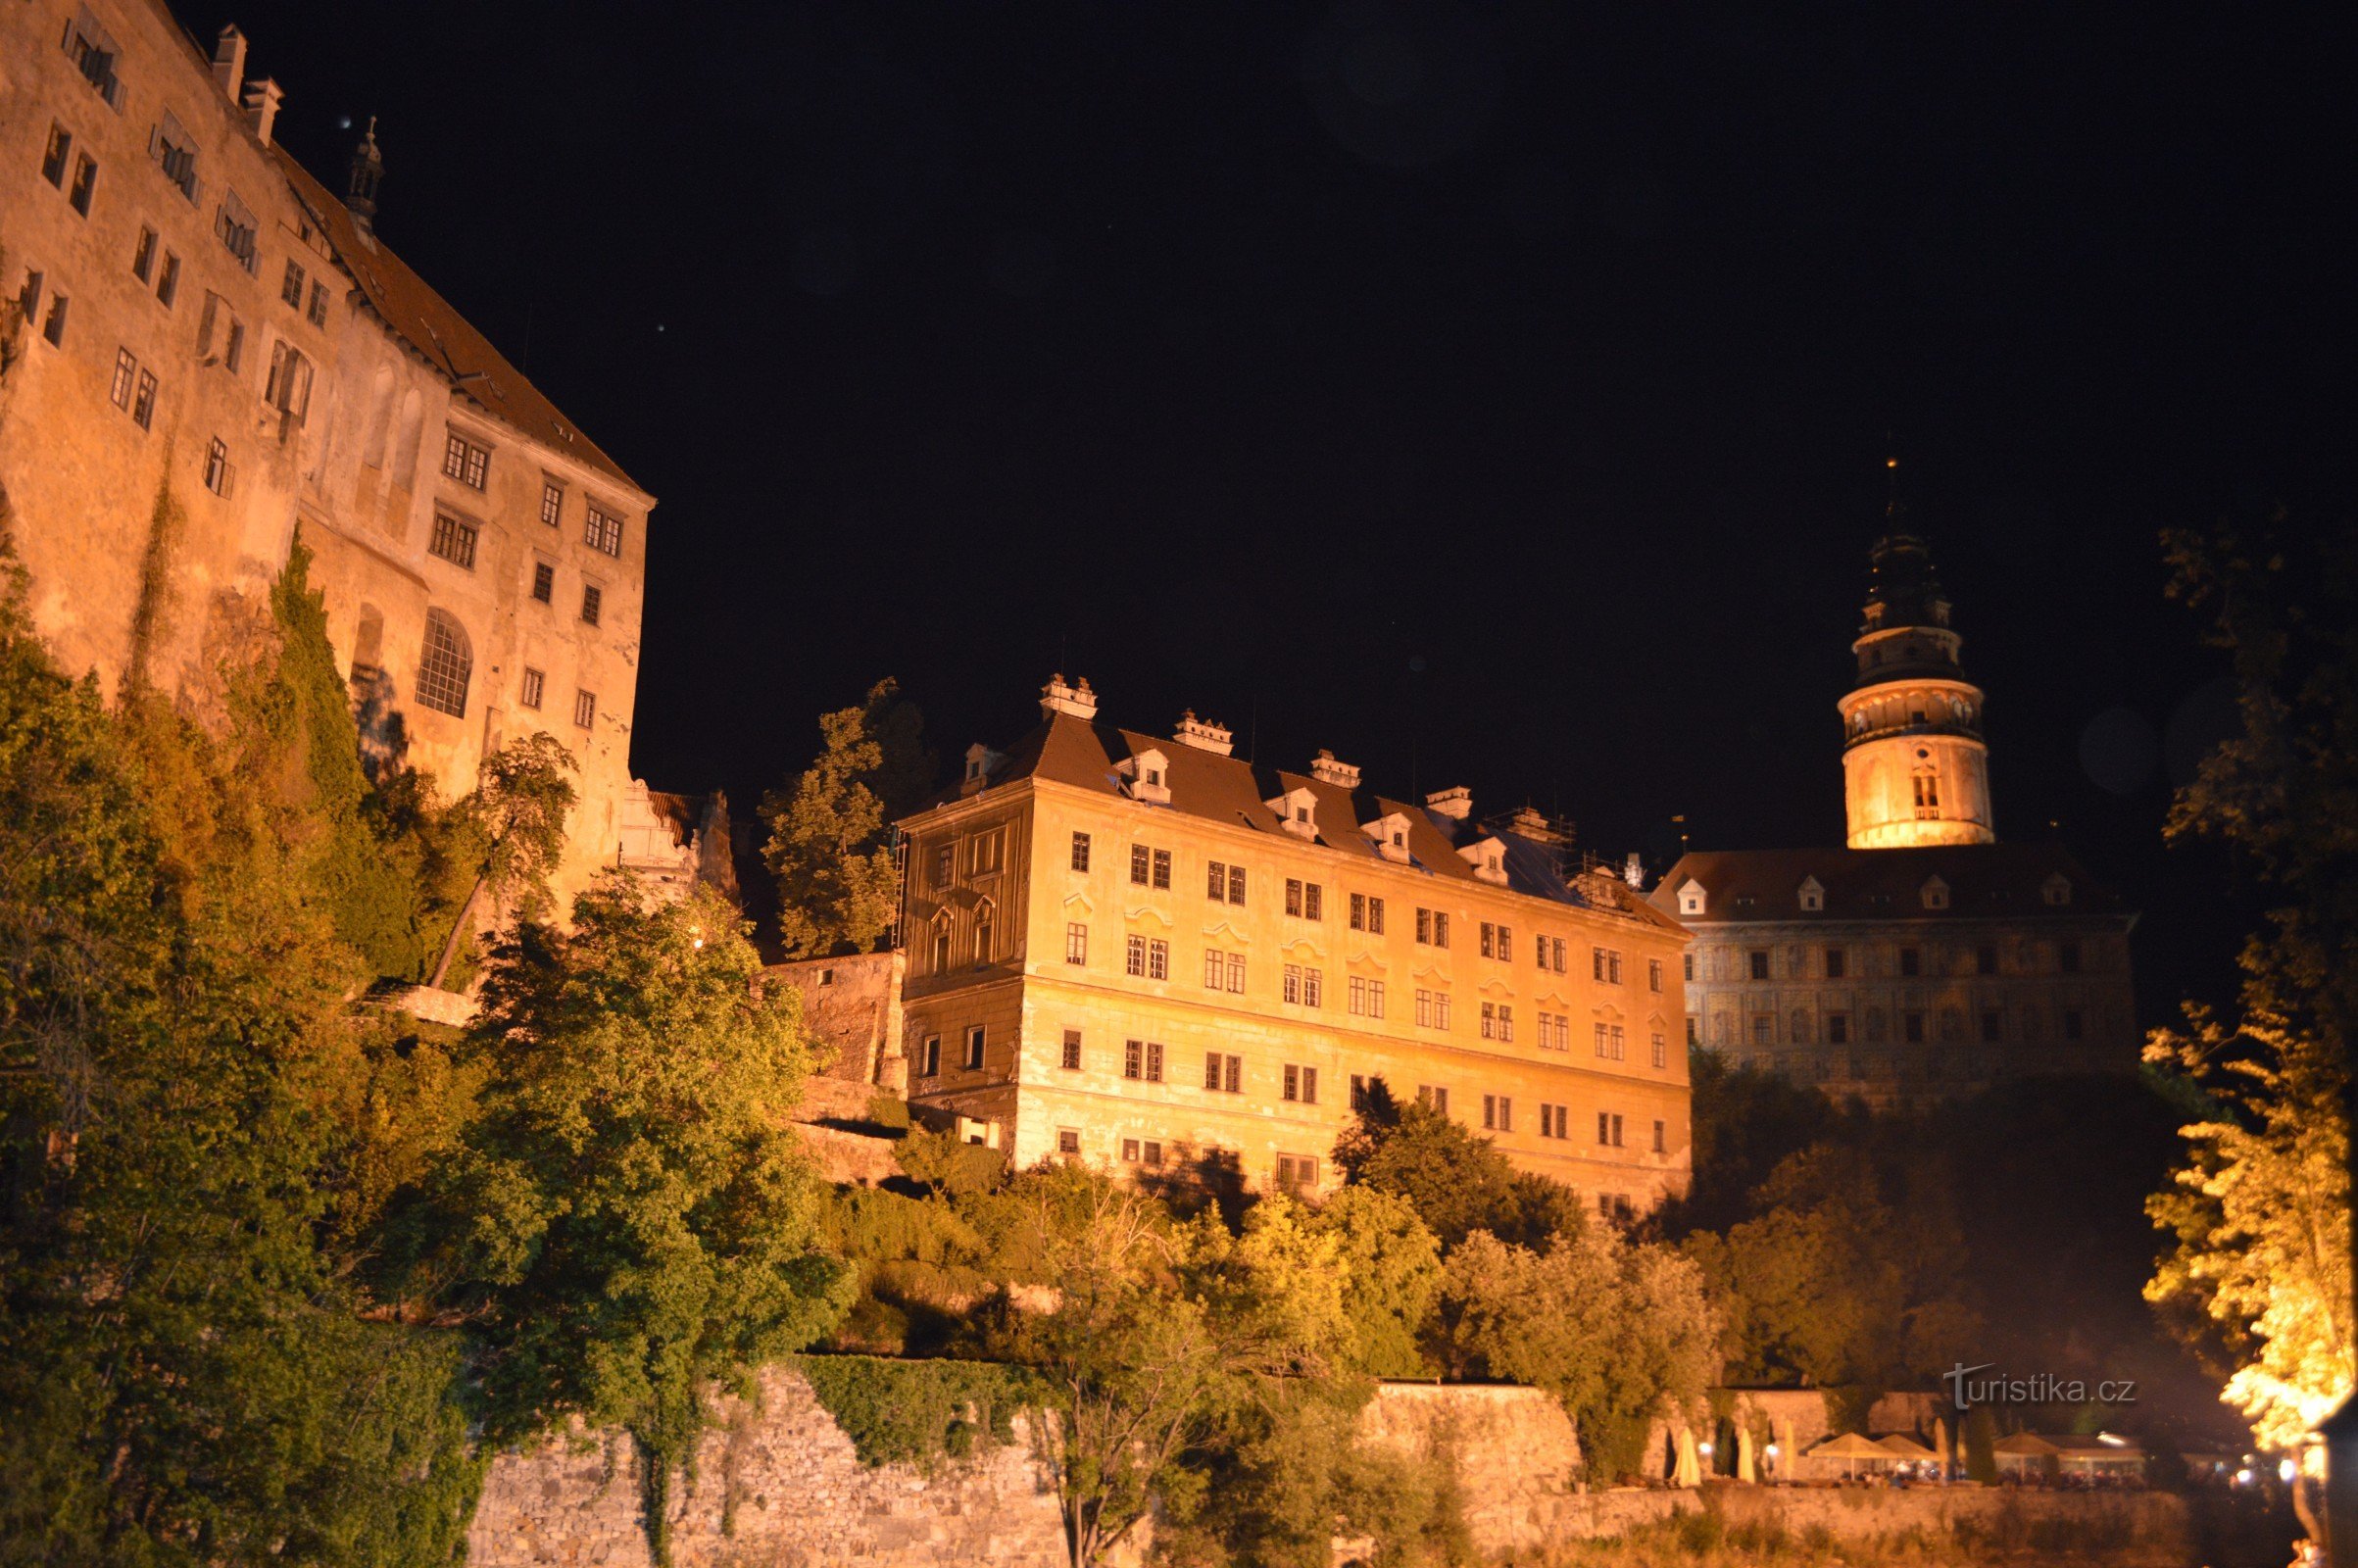 Český Krumlov at night